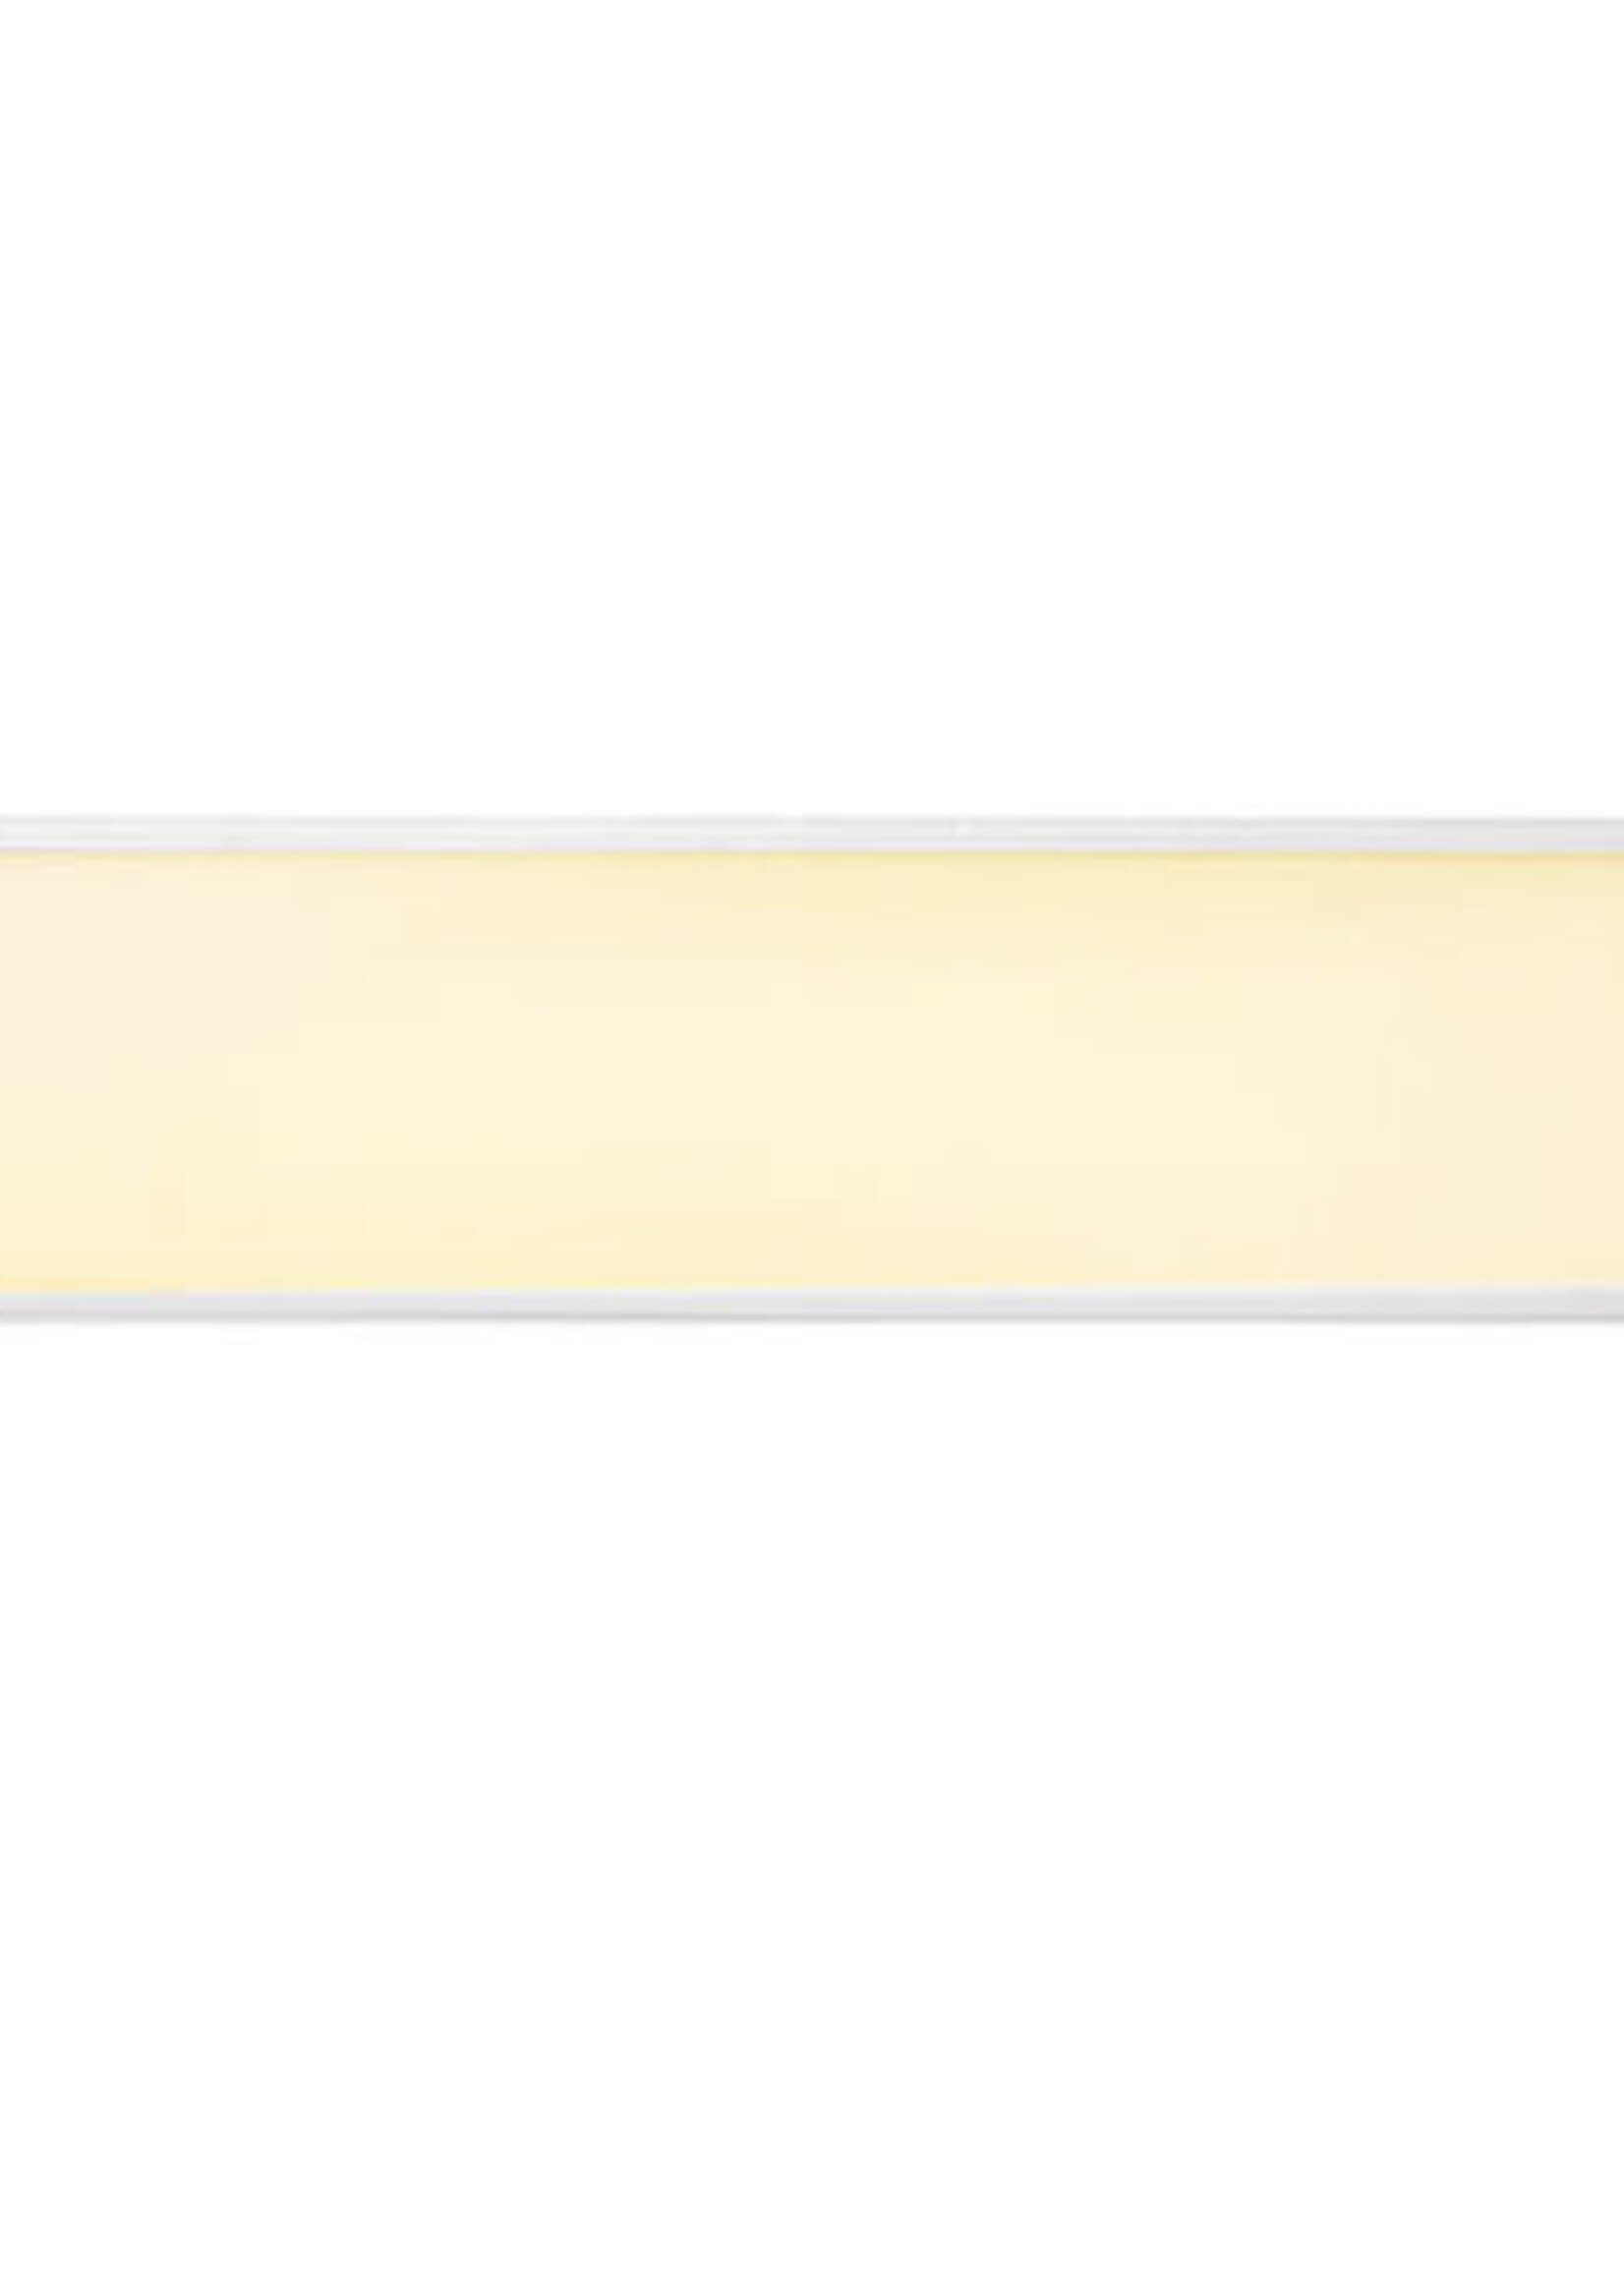 LEDWINKEL-Online LED Panel 30x120cm UGR<19 36W 120lm/W High lumen Edge-lit